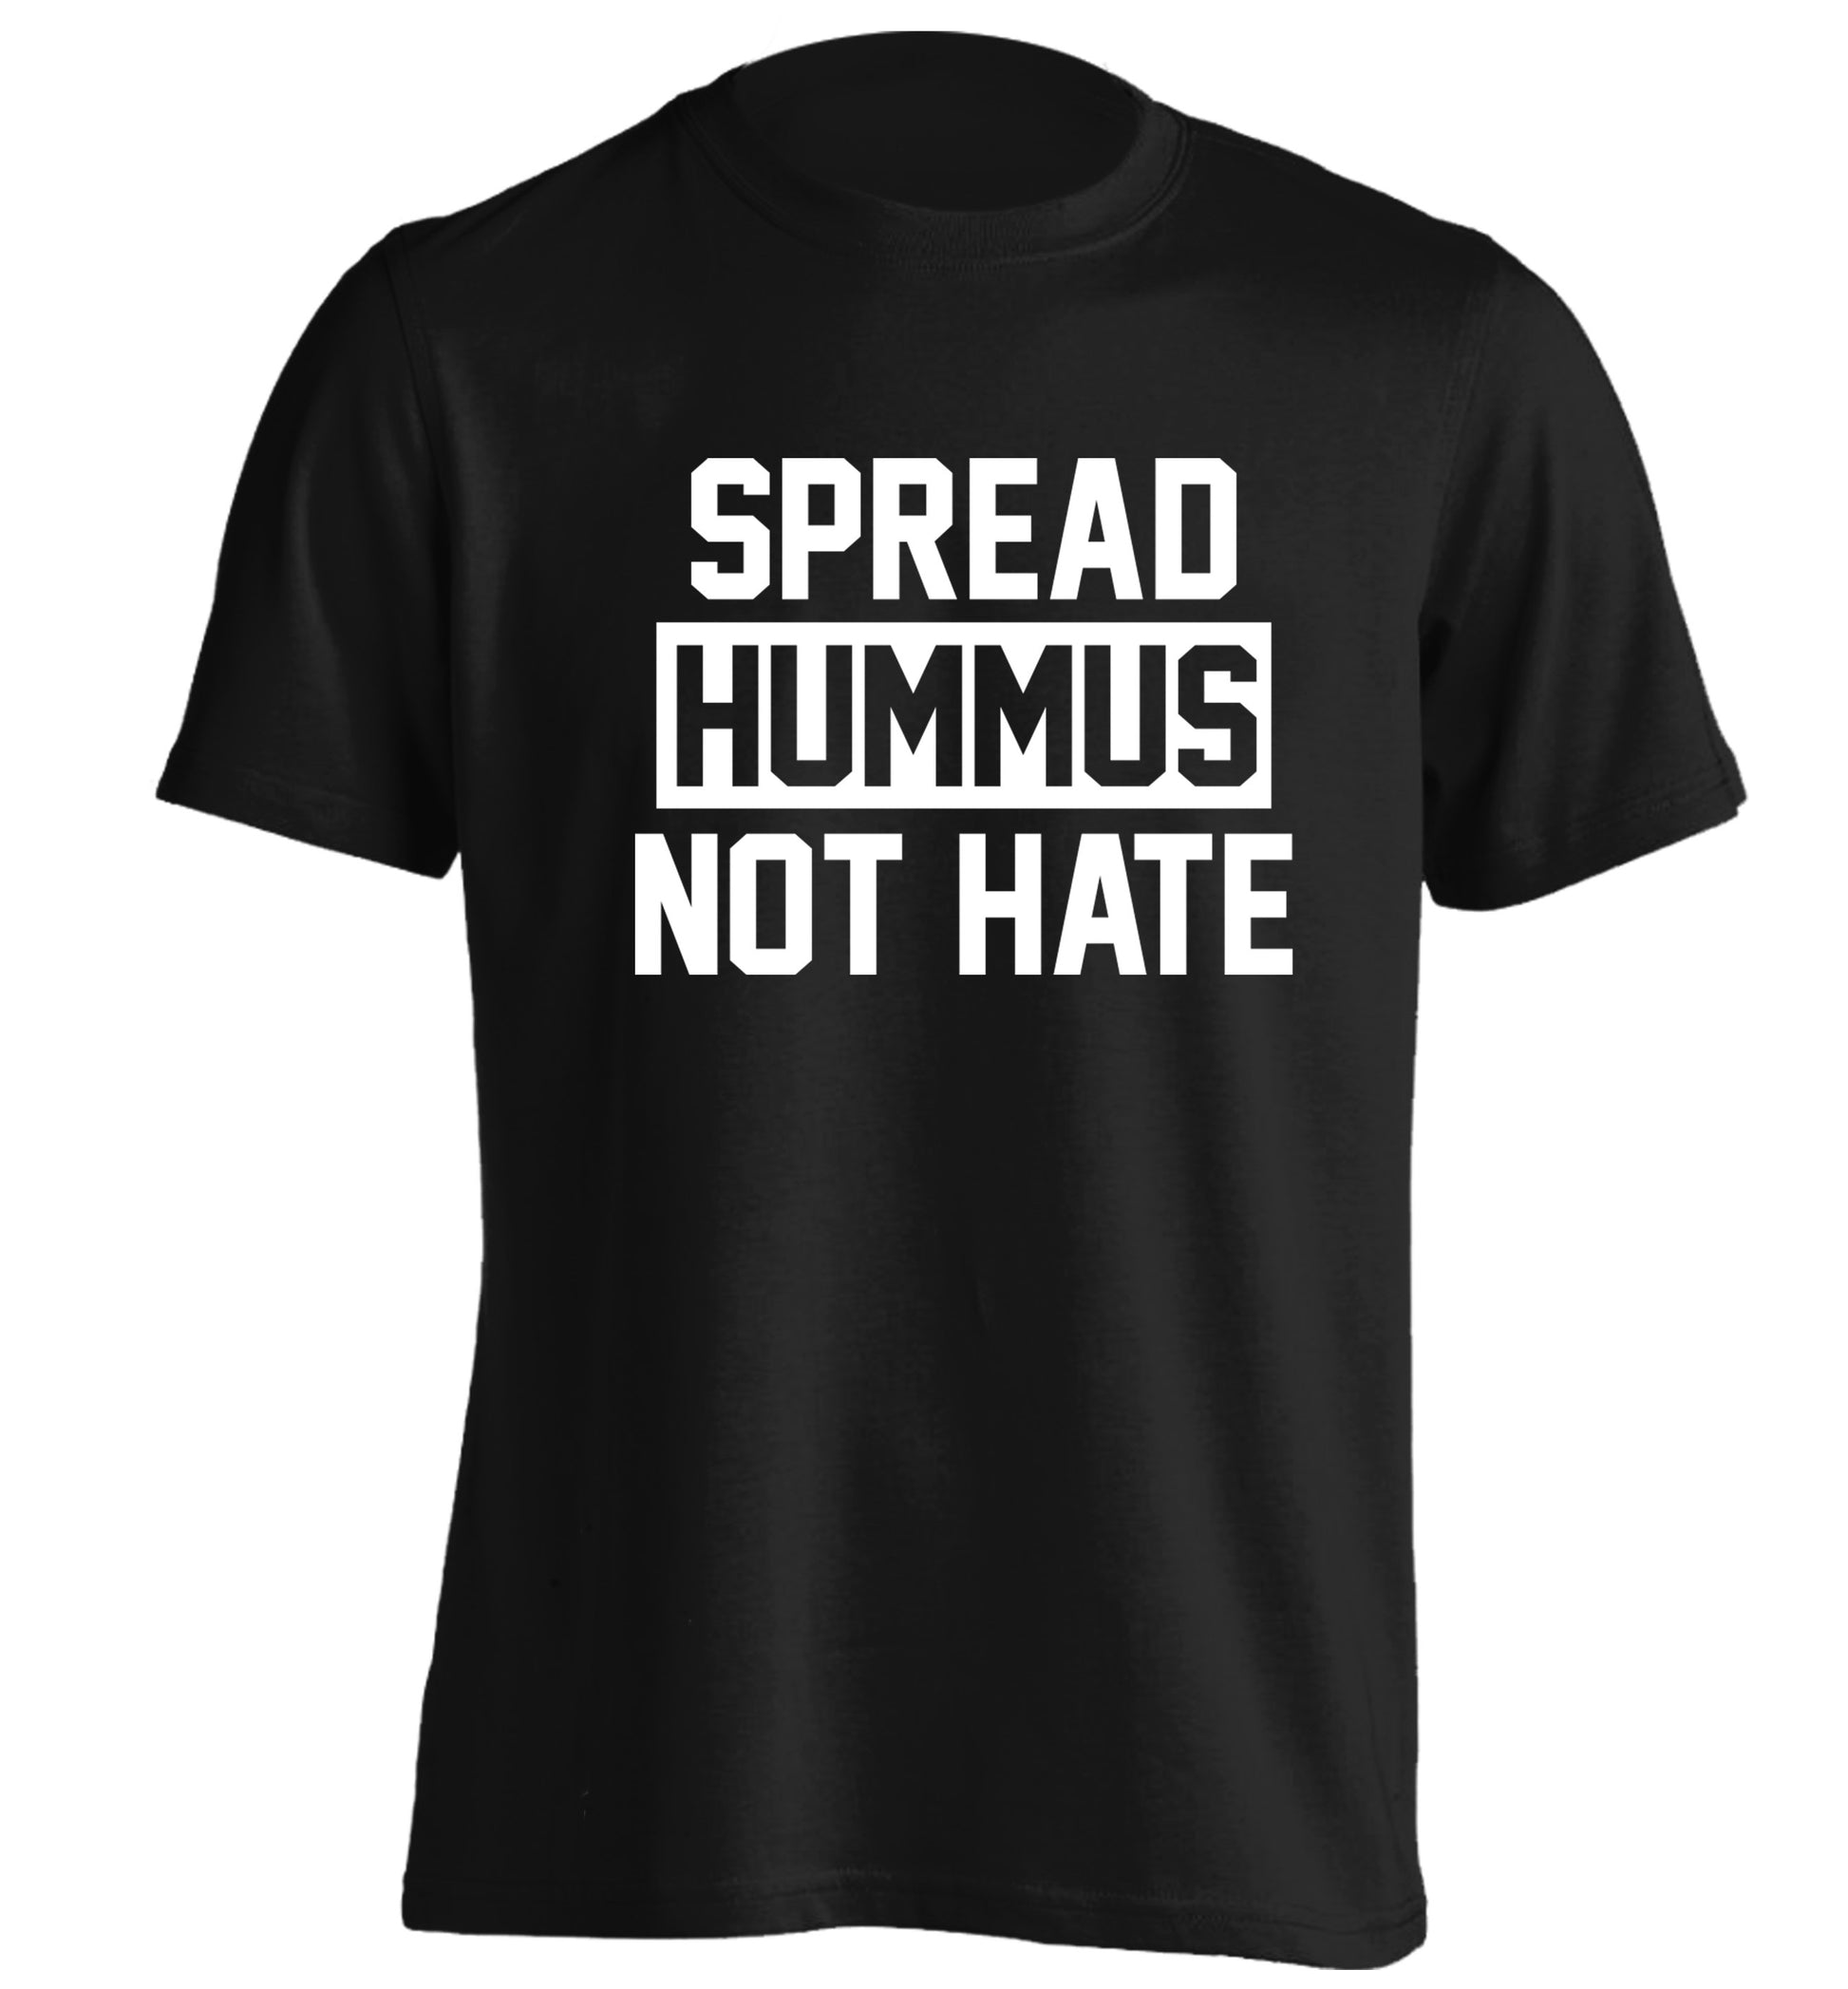 Spread hummus not hate adults unisex black Tshirt 2XL